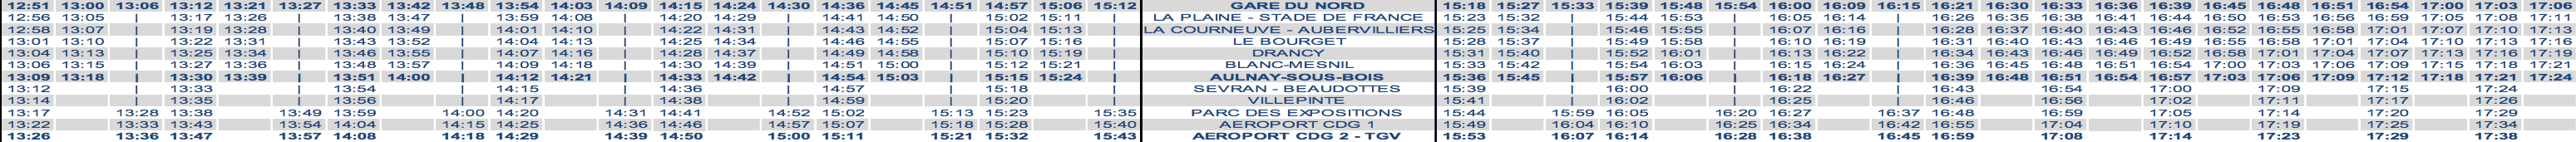 RER B Train Timetable Paris to CDG Afternoon Weekday 2020 strike